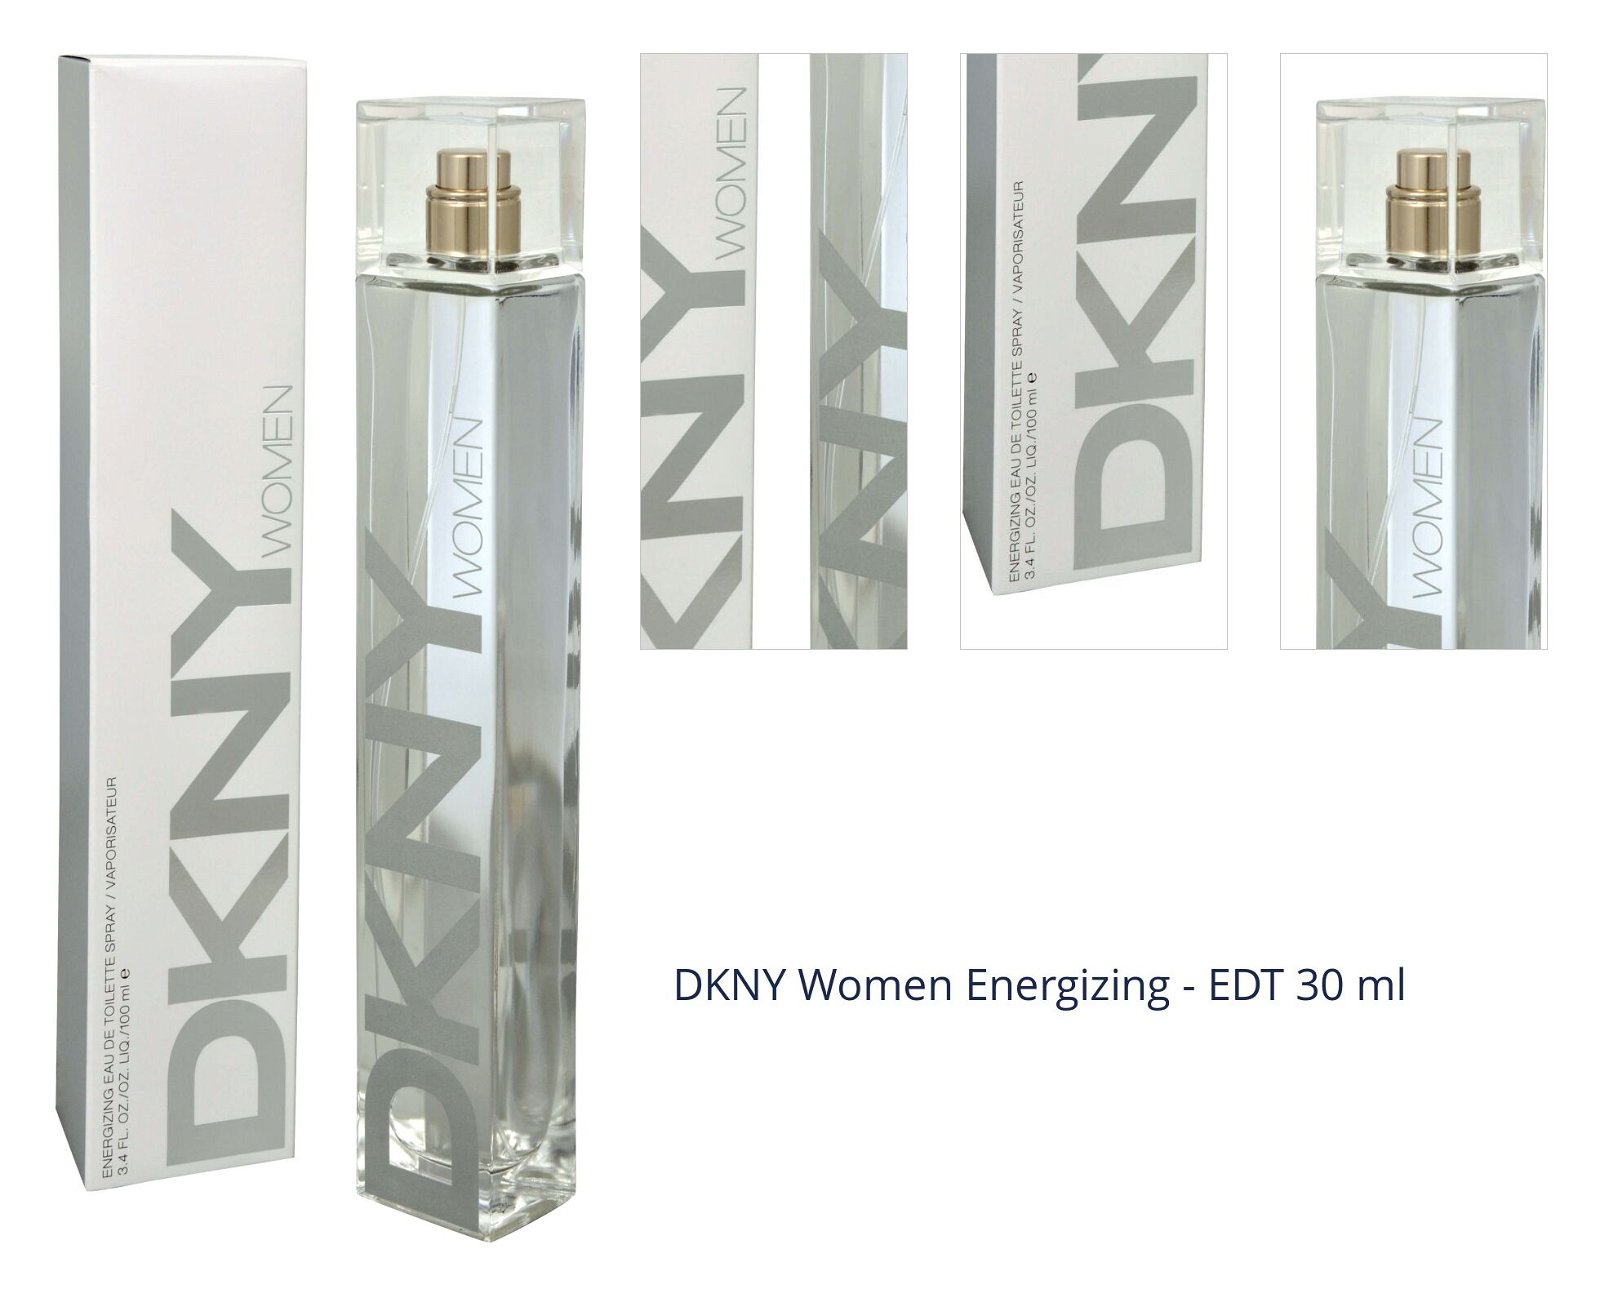 DKNY Women Energizing - EDT 30 ml 7